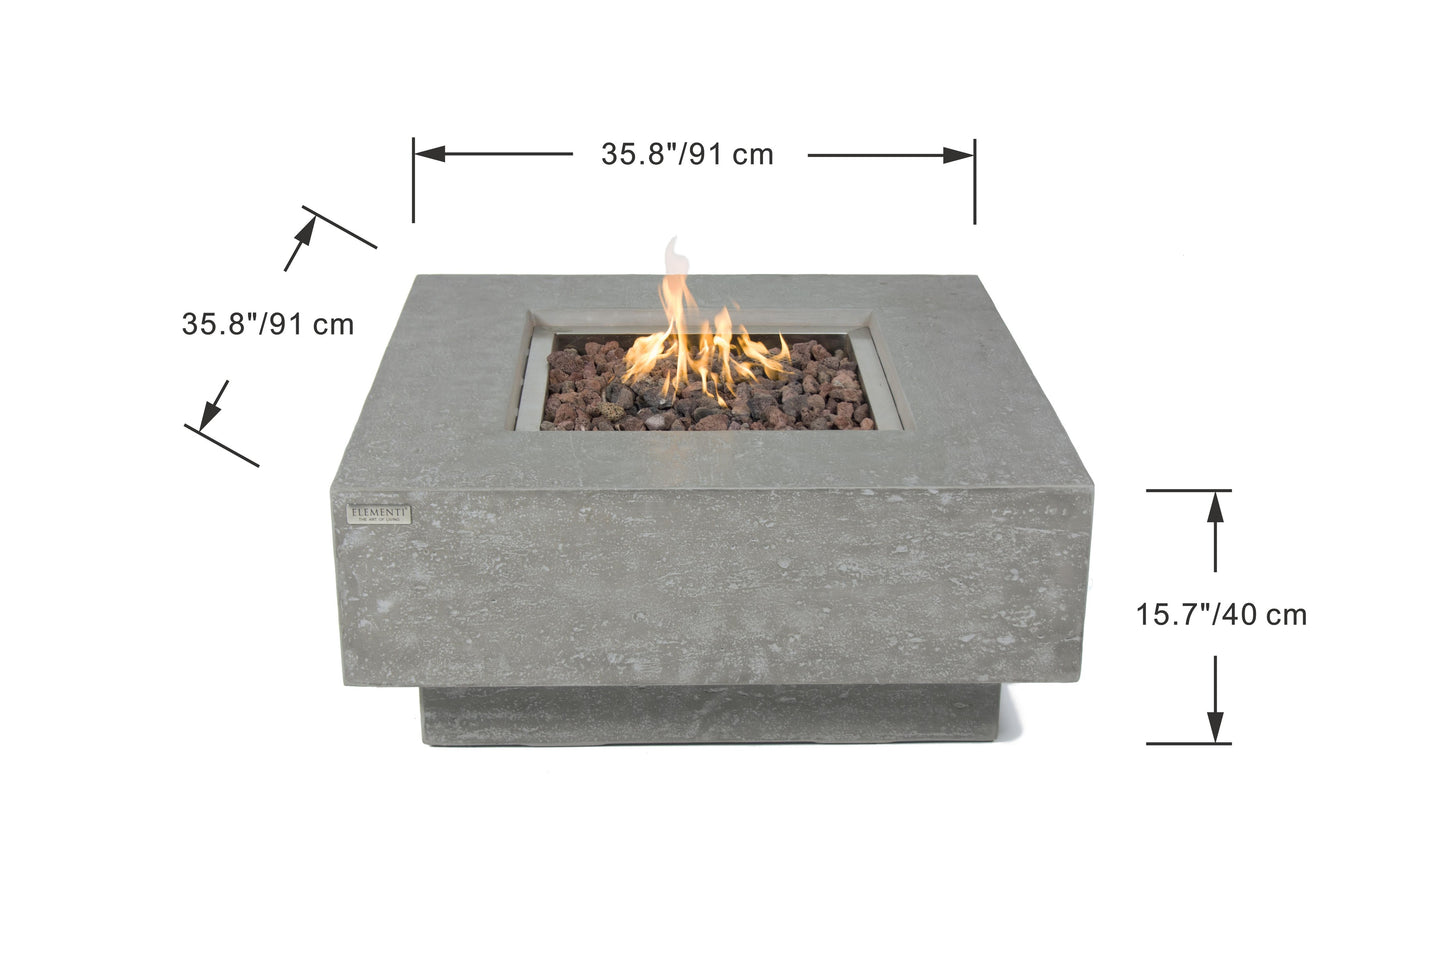 Manhattan Concrete Square Firepit Table - Light Gray